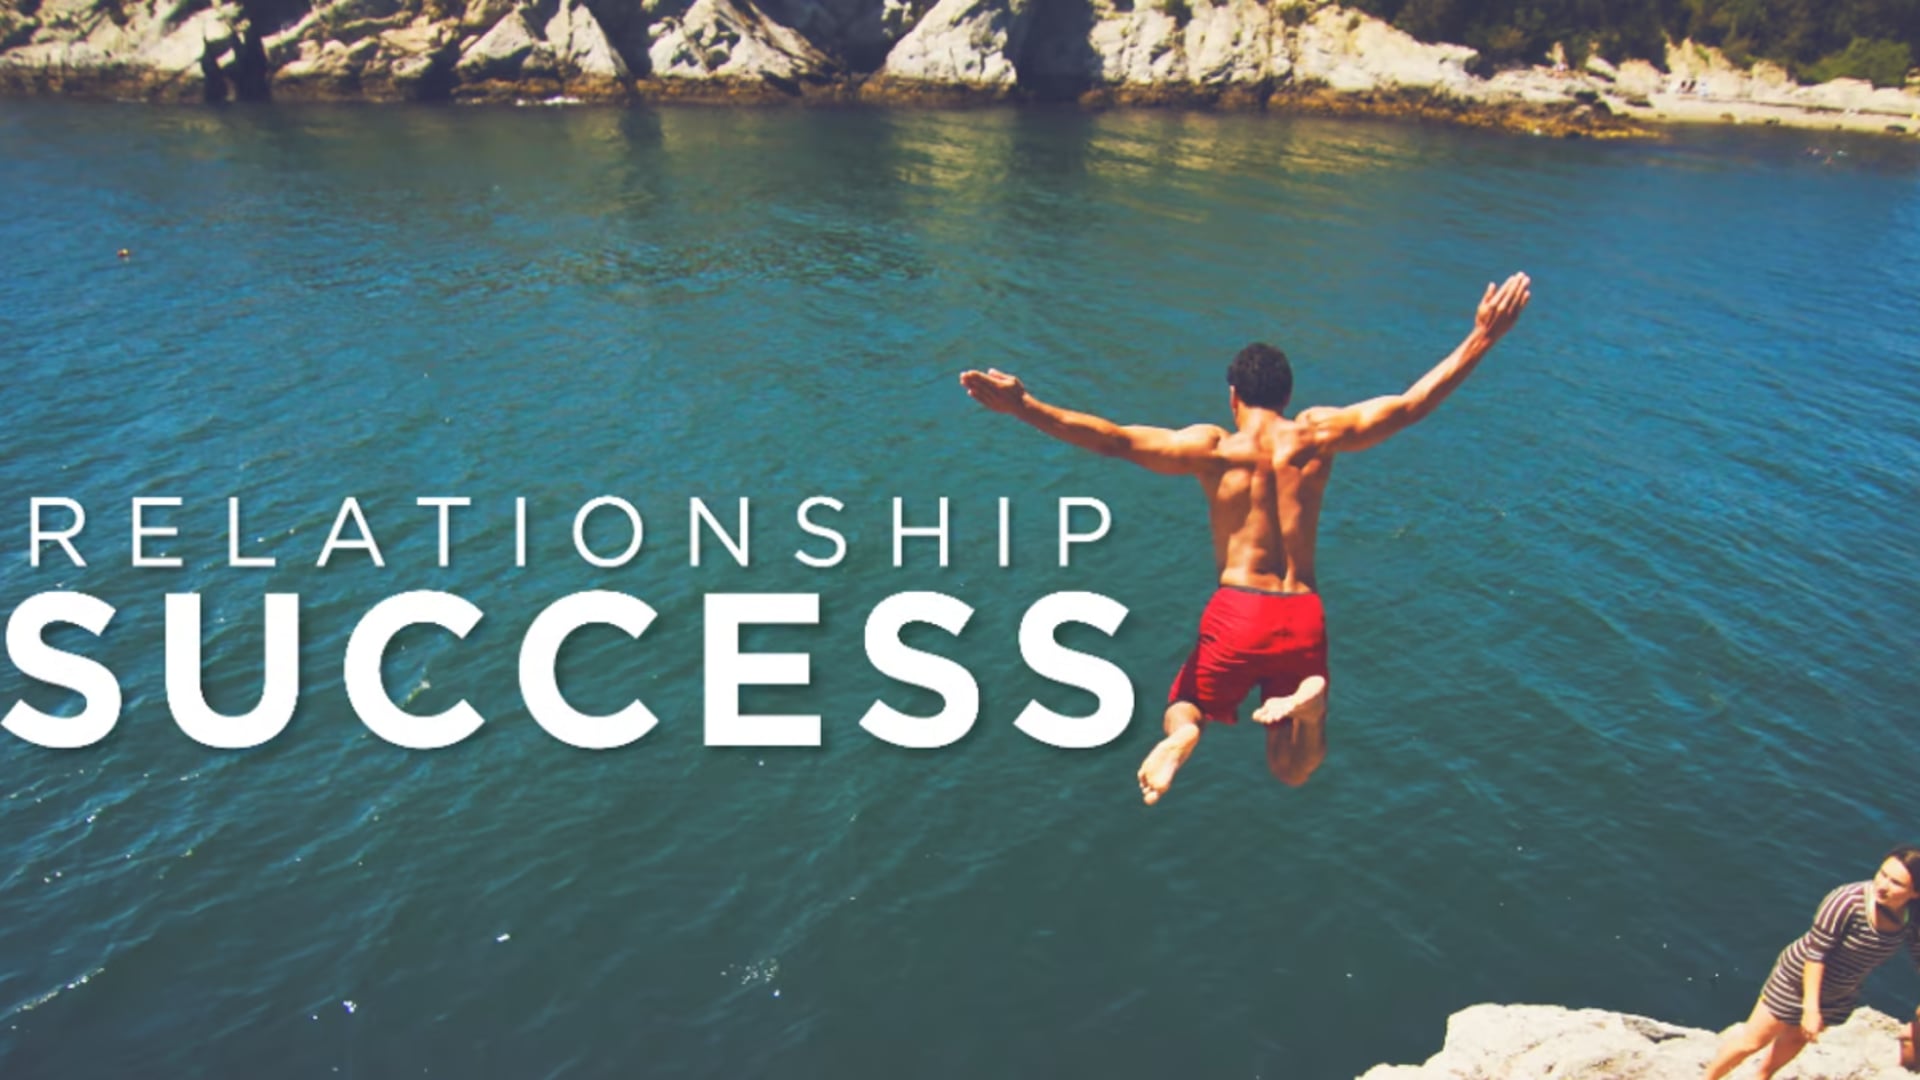 Relationship success